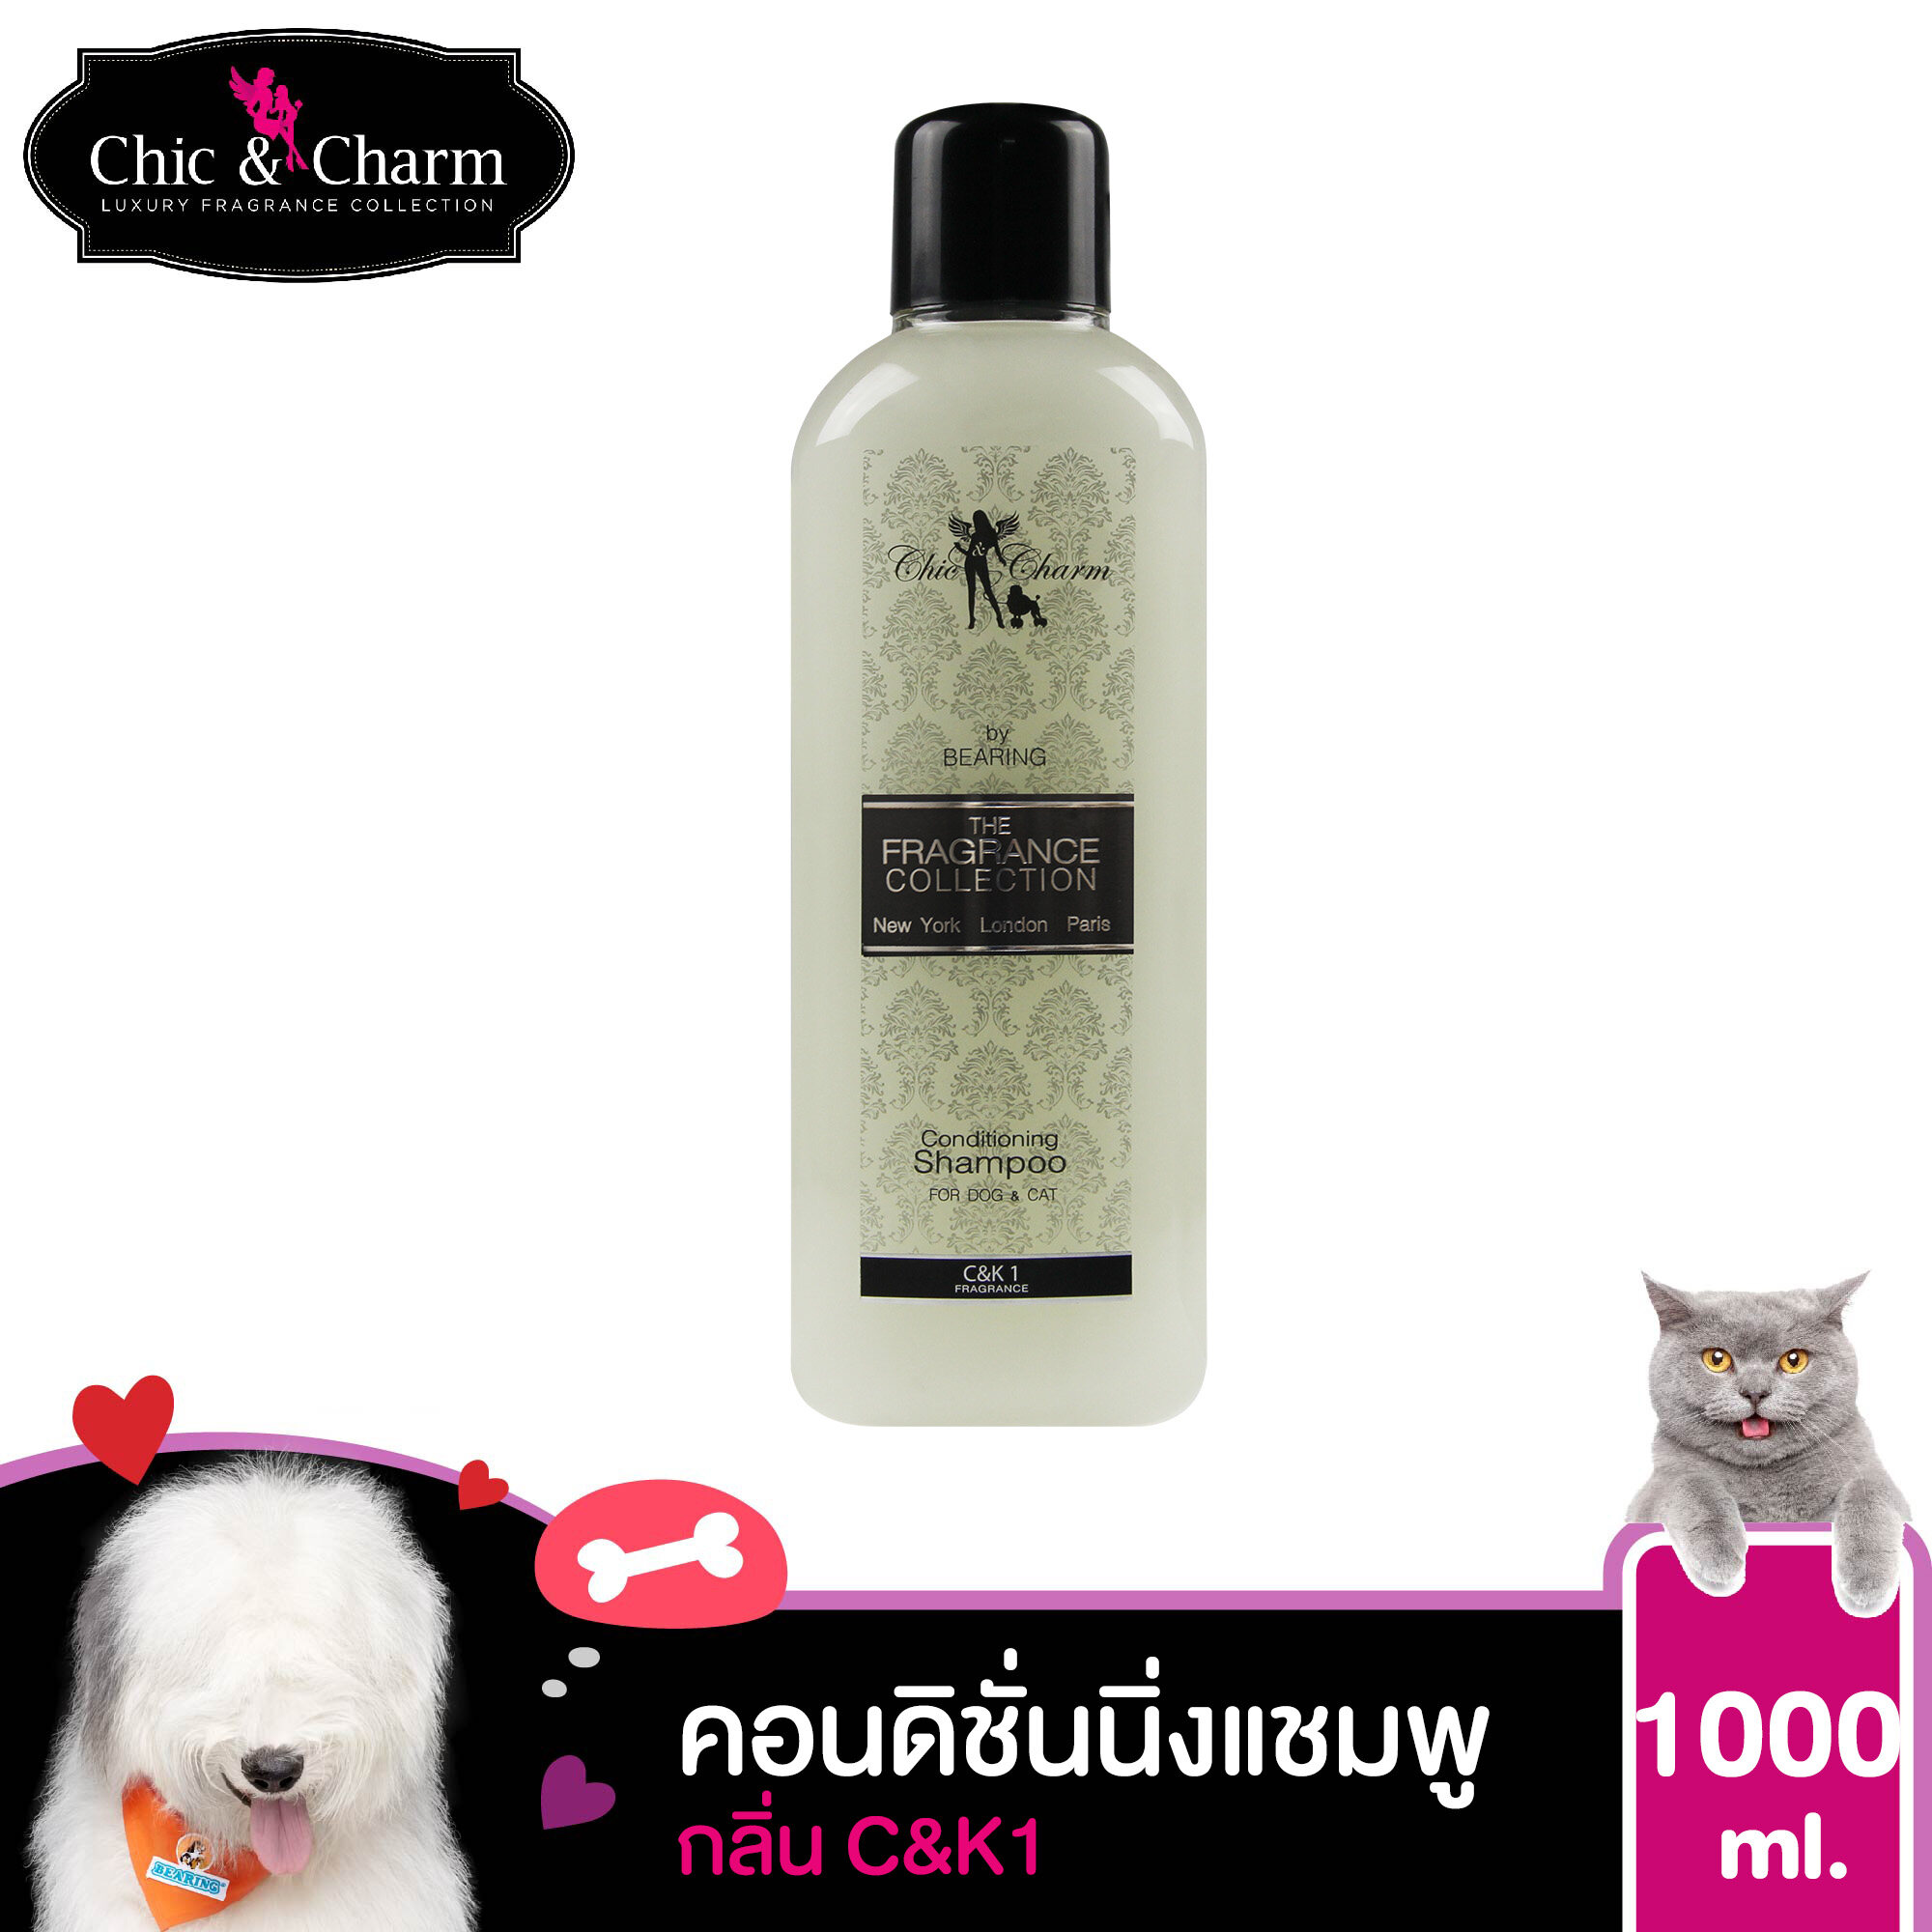 Chic & Charm Conditioning Shampoo ชิคแอนด์ชาร์ม คอนดิชั่นนิ่งแชมพู 1000ml.#C&K1